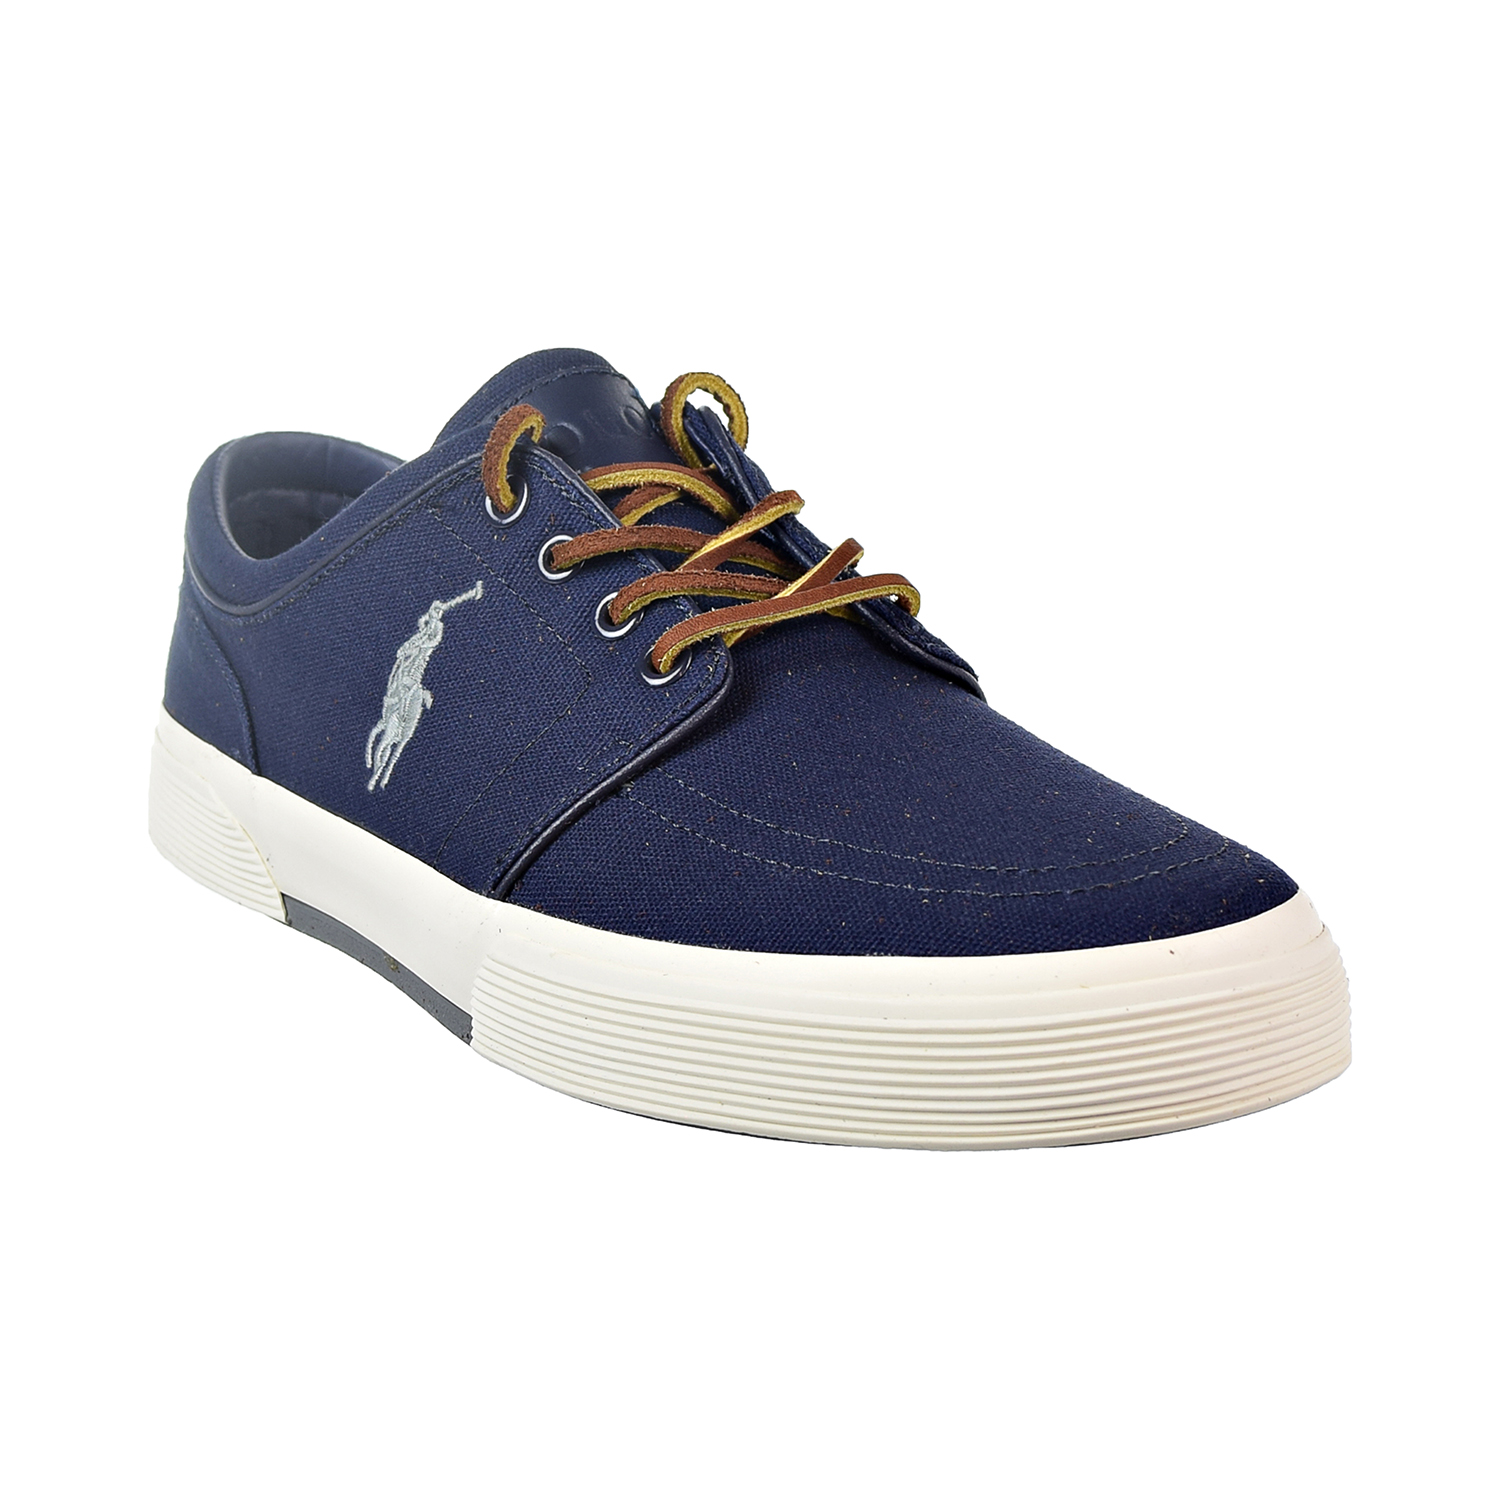 Polo Ralph Lauren Faxon Low Men's Shoes Navy/Grey 816507895-030